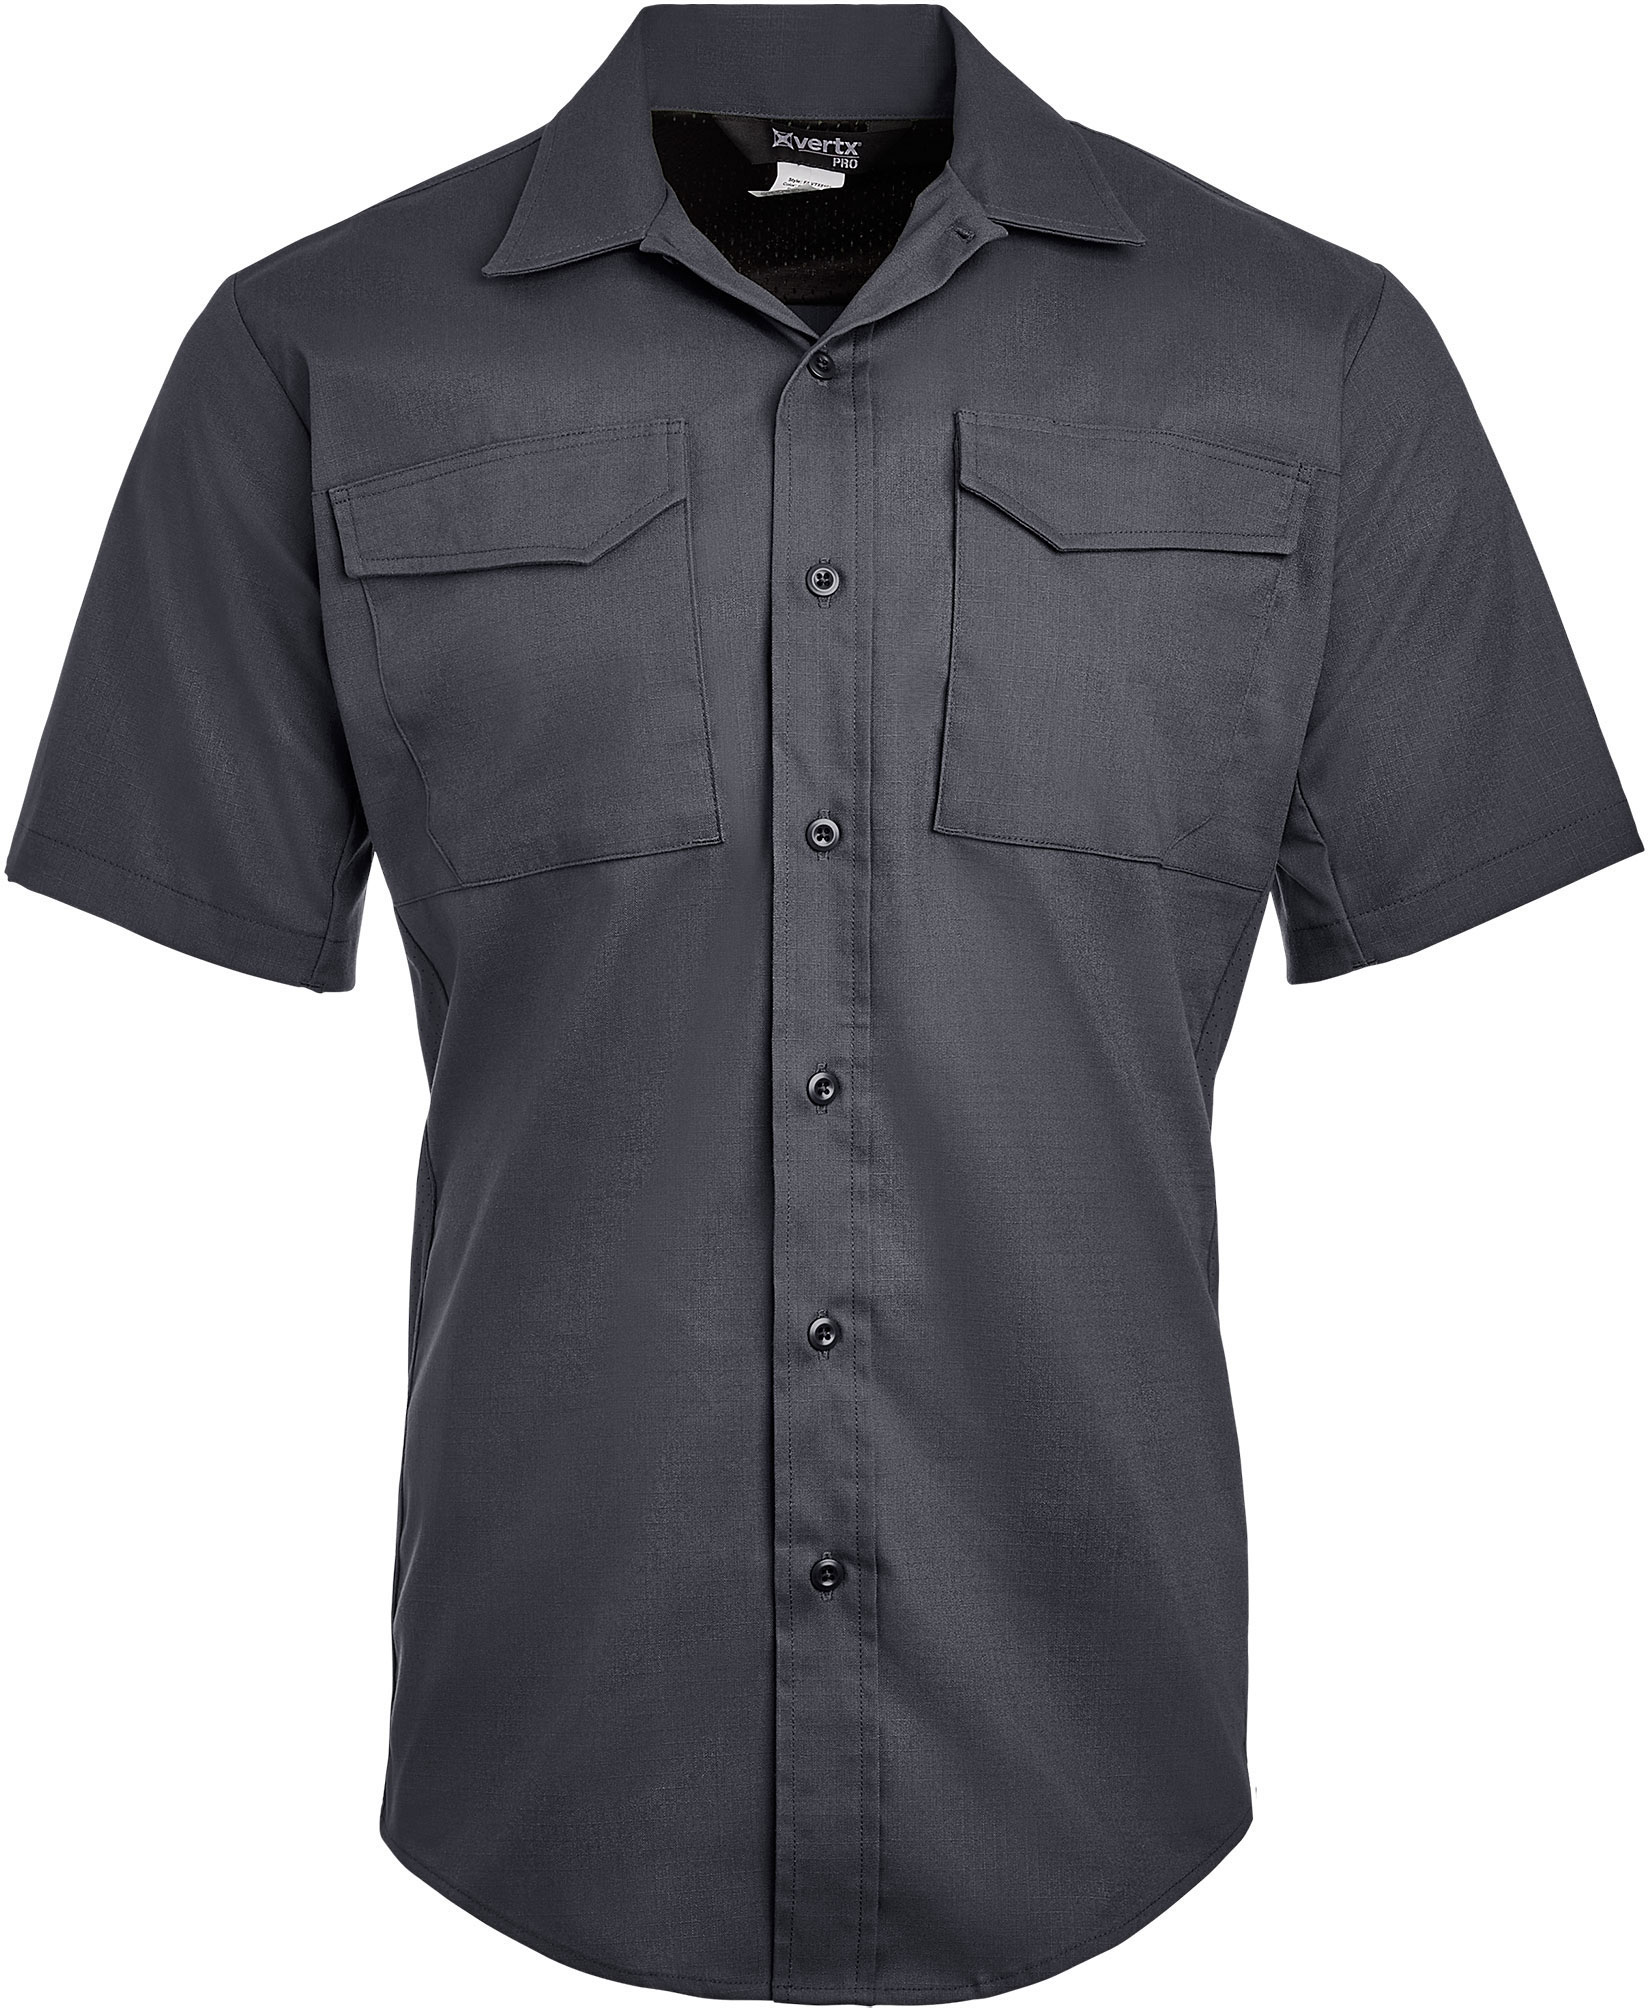 Vertx Phantom Flex Short Sleeve Shirts Men's Up to 13% Off w/ Free  Shipping